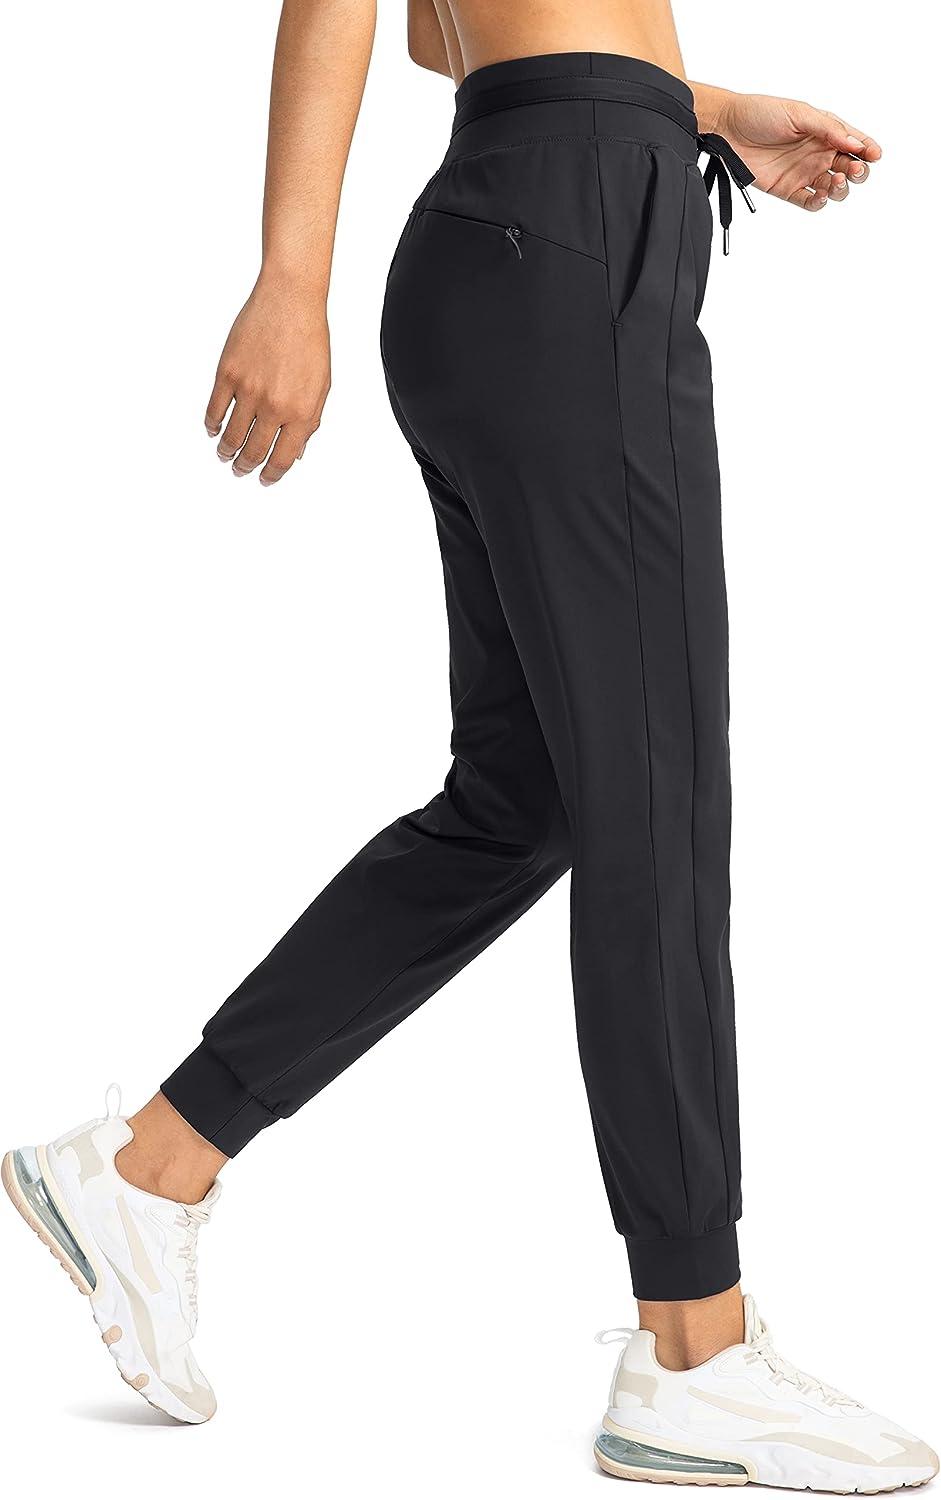  G Gradual Women's Joggers Pants with Zipper Pockets